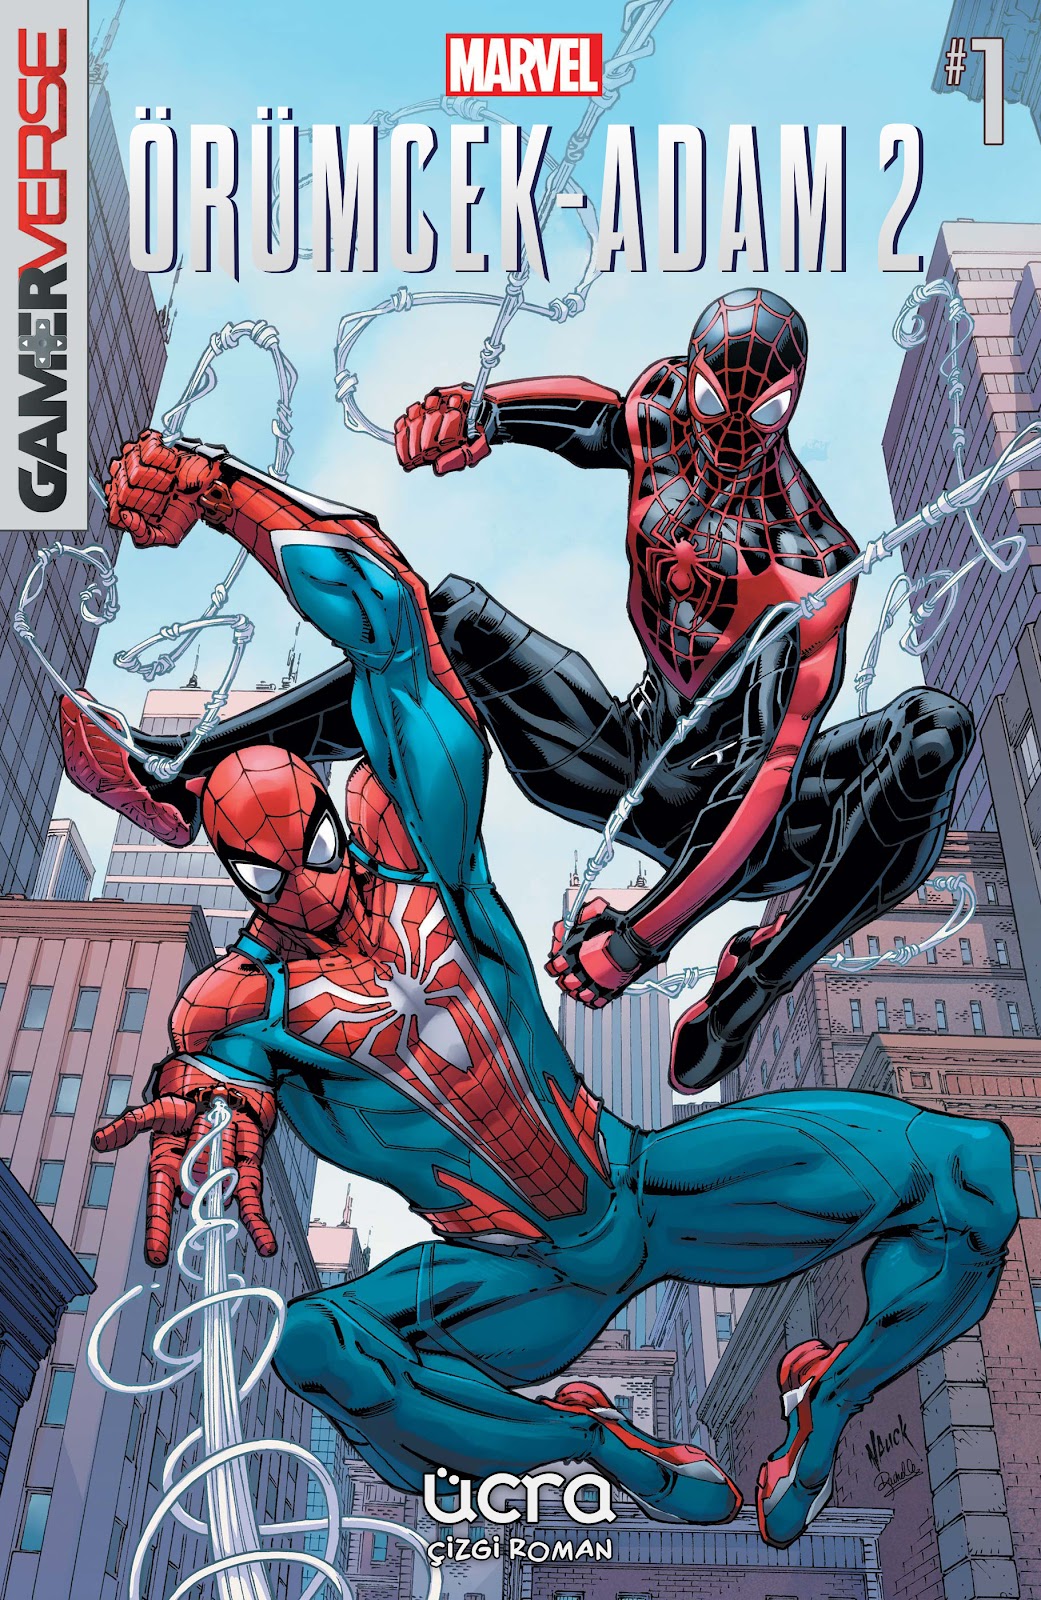 Marvel%27s-Spider-Man-2-01-00.jpg